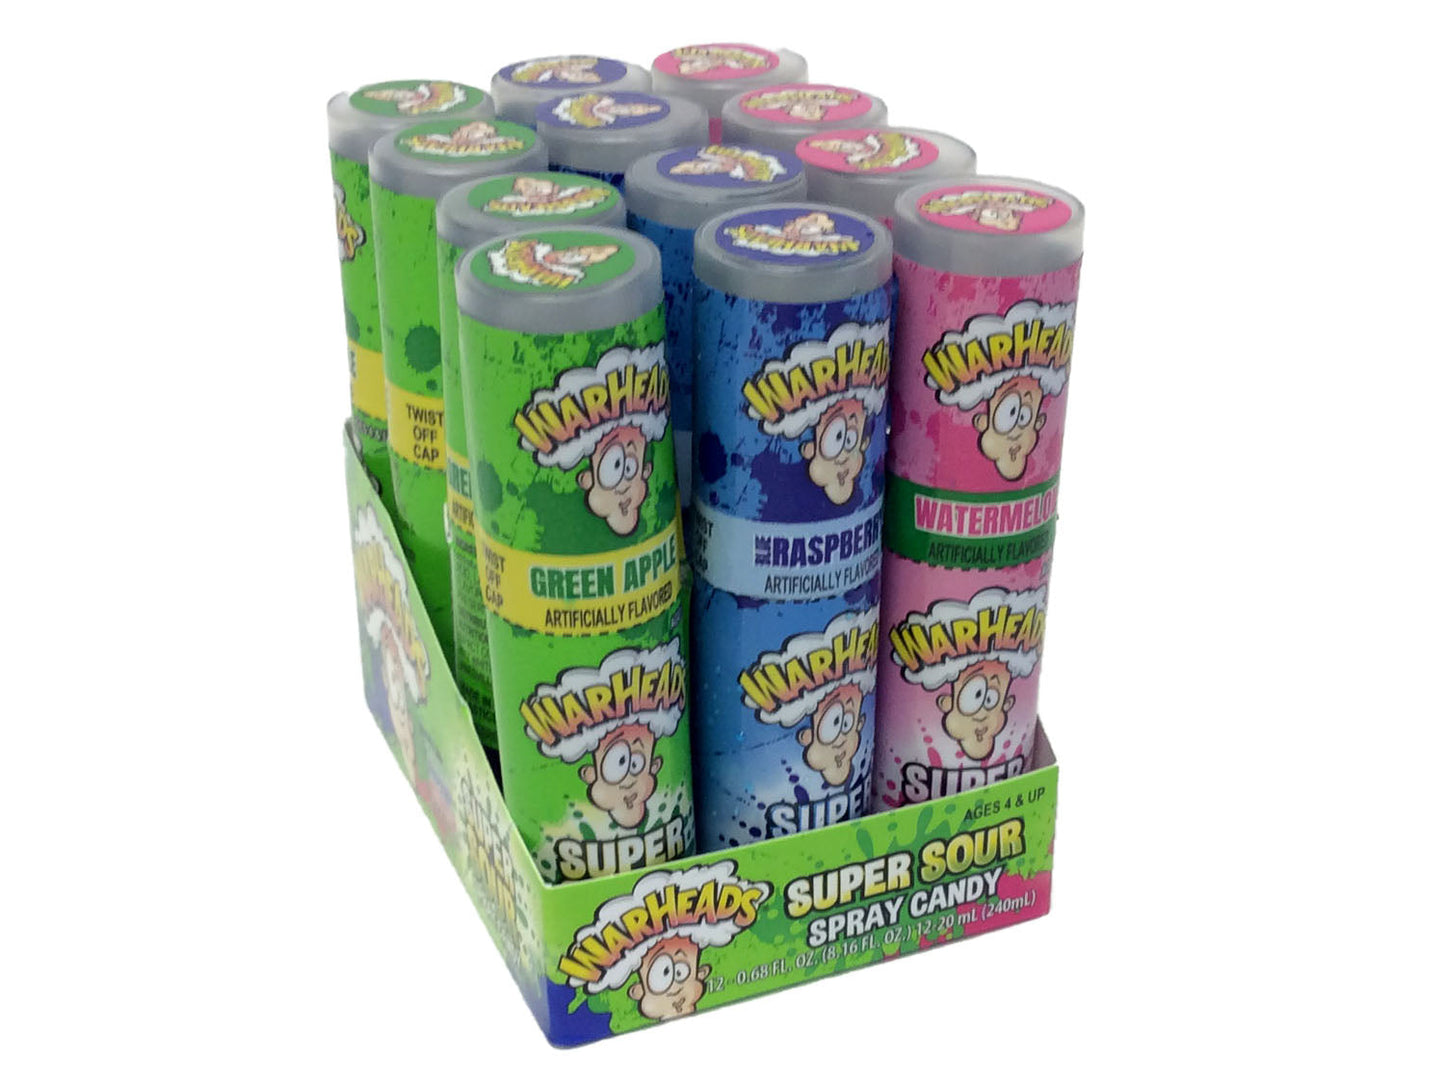 Warheads Super Sour Spray - 0.68 oz - box of 12